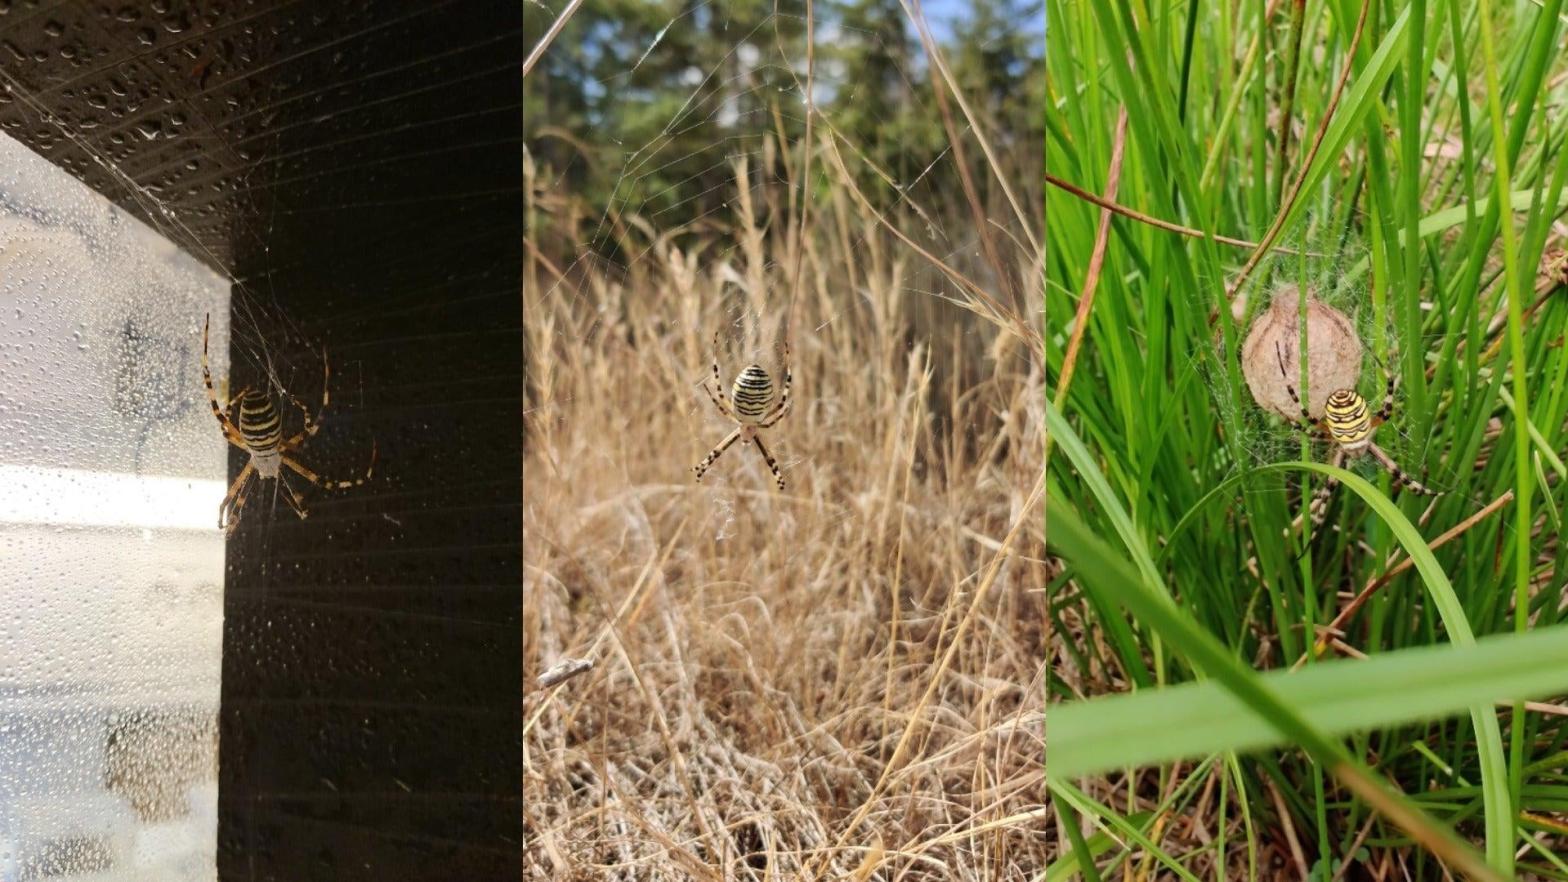 Photos of Argiope bruennichi, aka the wasp spider, taken by the Danish researchers. This spider uses silk to build spiral-shaped webs. (Photo: Trine Bilde/Simon Fruergaard)